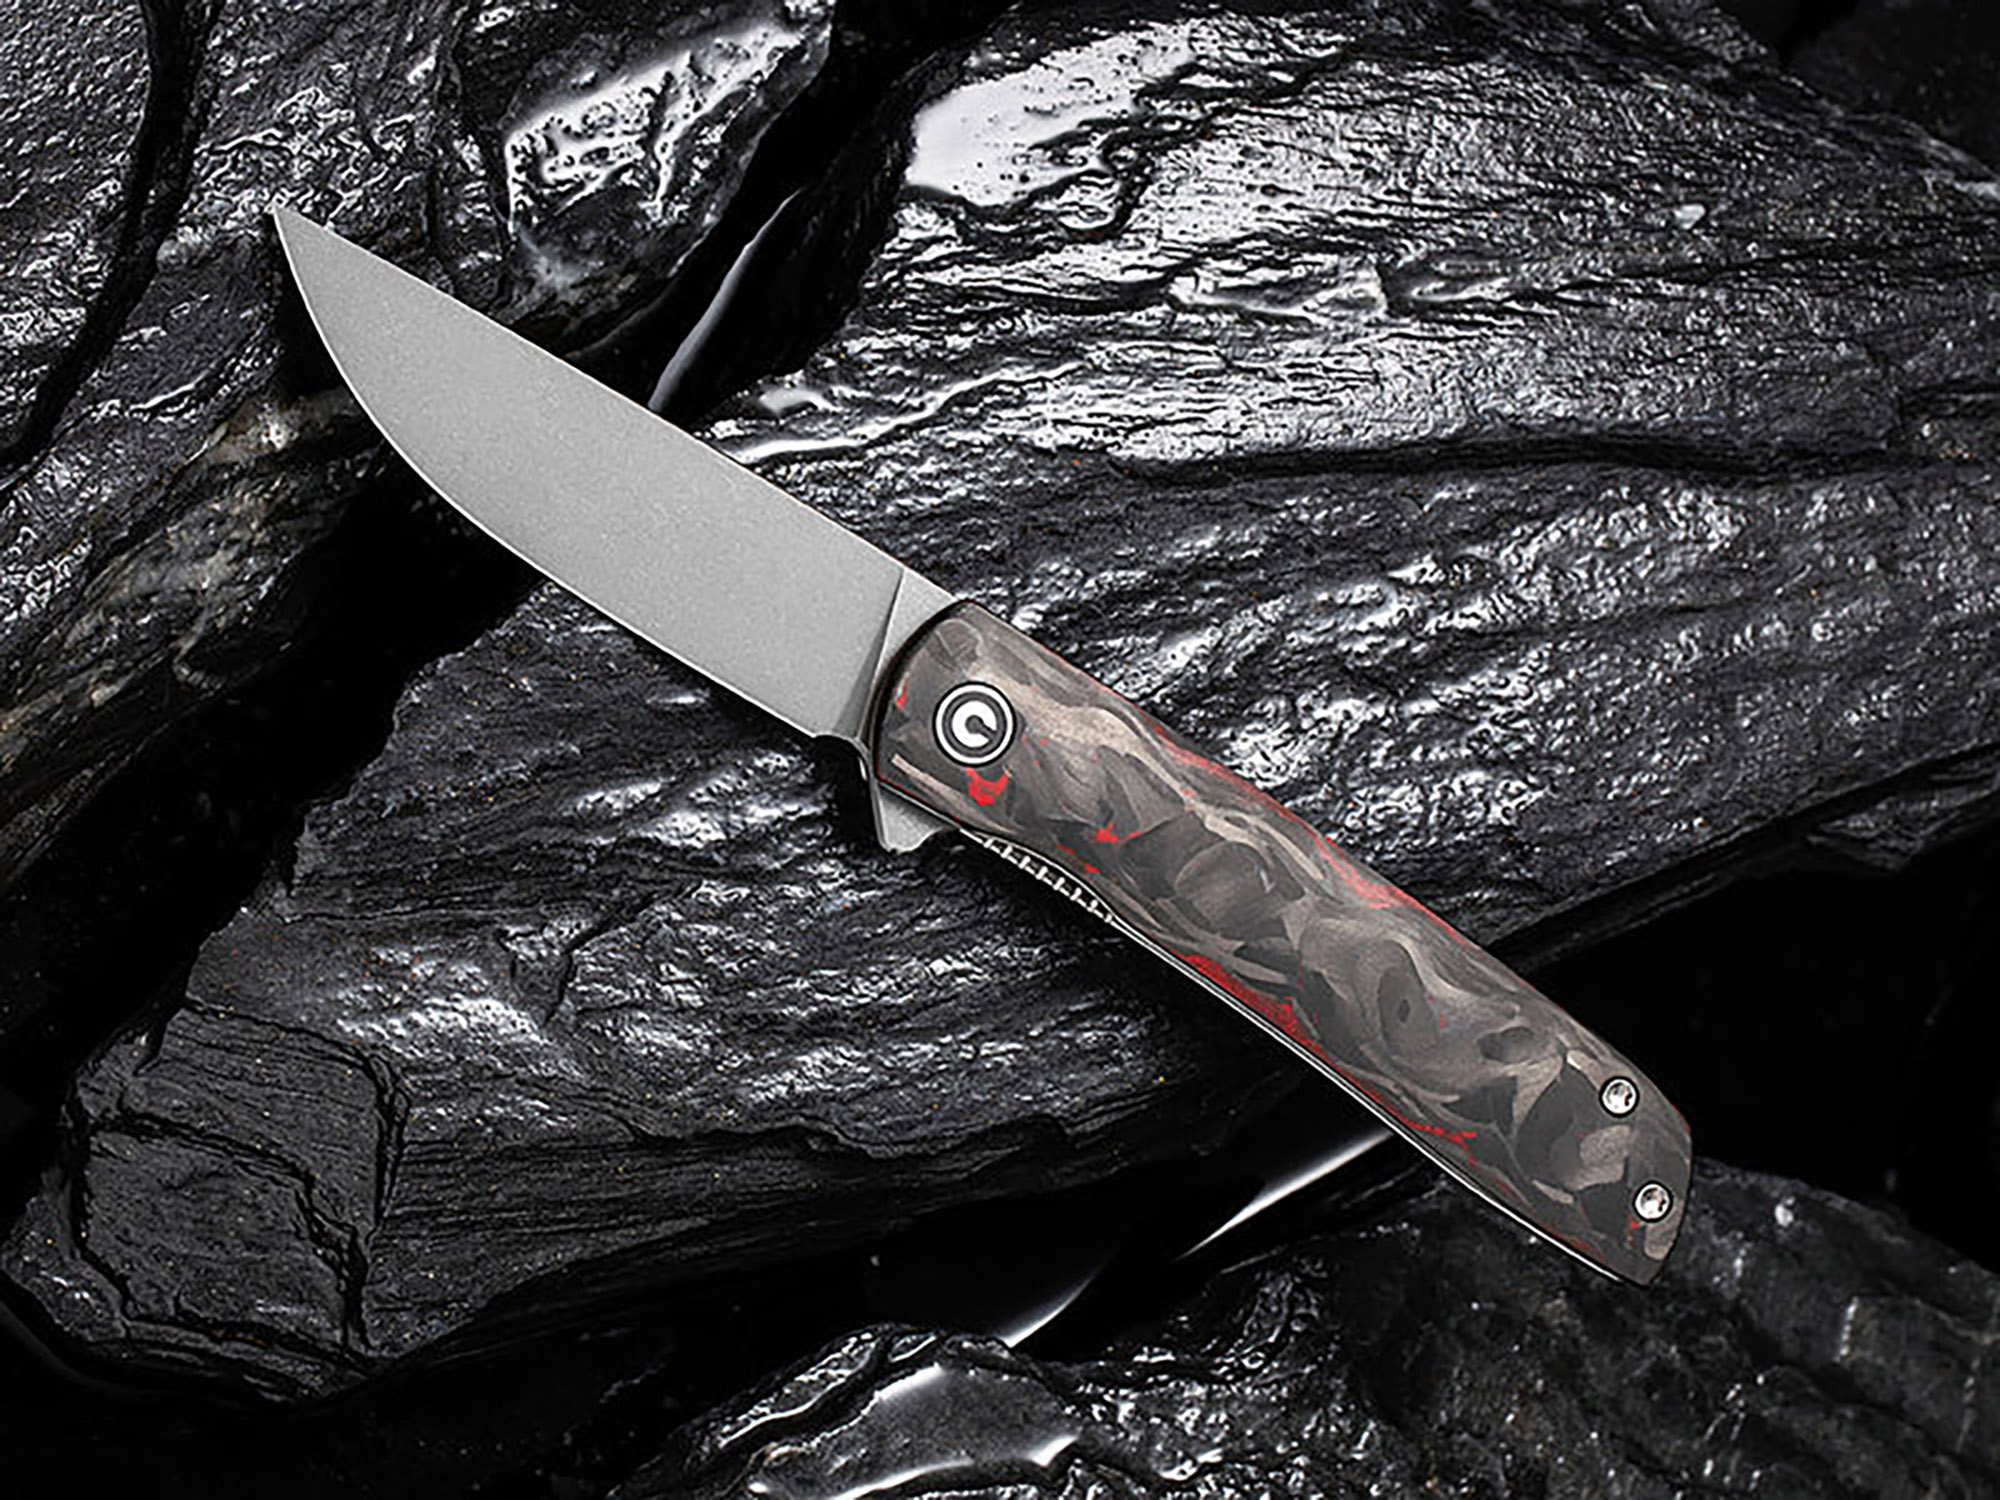 Brad Zinker Knife on display over beautiful black polished rock